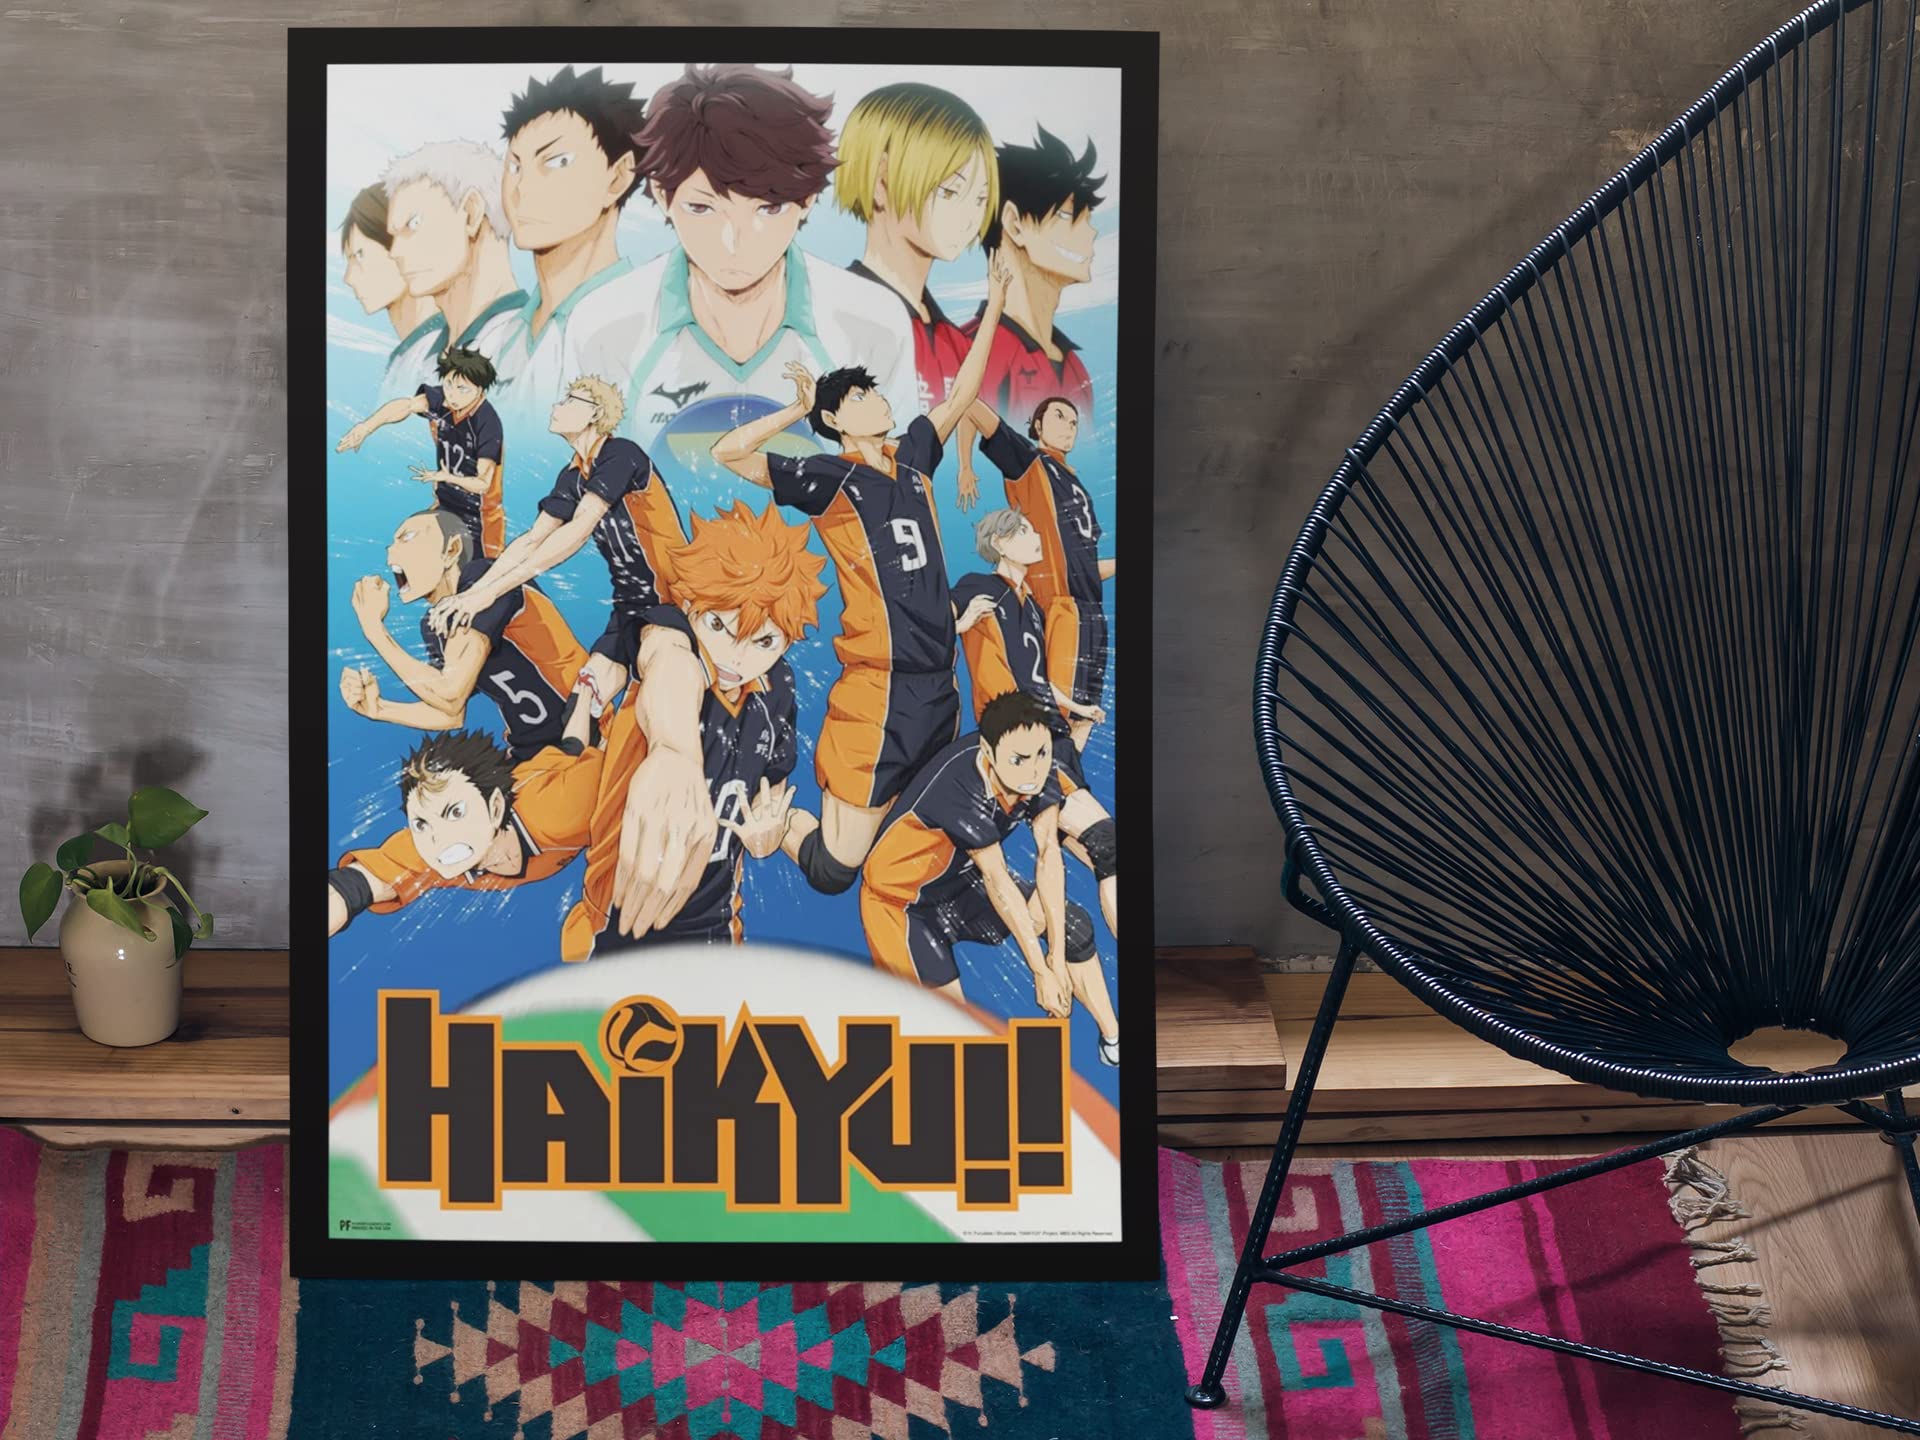 Mua Haikyuu Poster Season 1 Key Art English Anime Stuff Haikyuu Manga Haikyu  Anime Poster Crunchyroll Streaming Anime Merch Animated Series Show  Karasuno Volleyball Cool Wall Decor Art Print Poster 12x18 trên